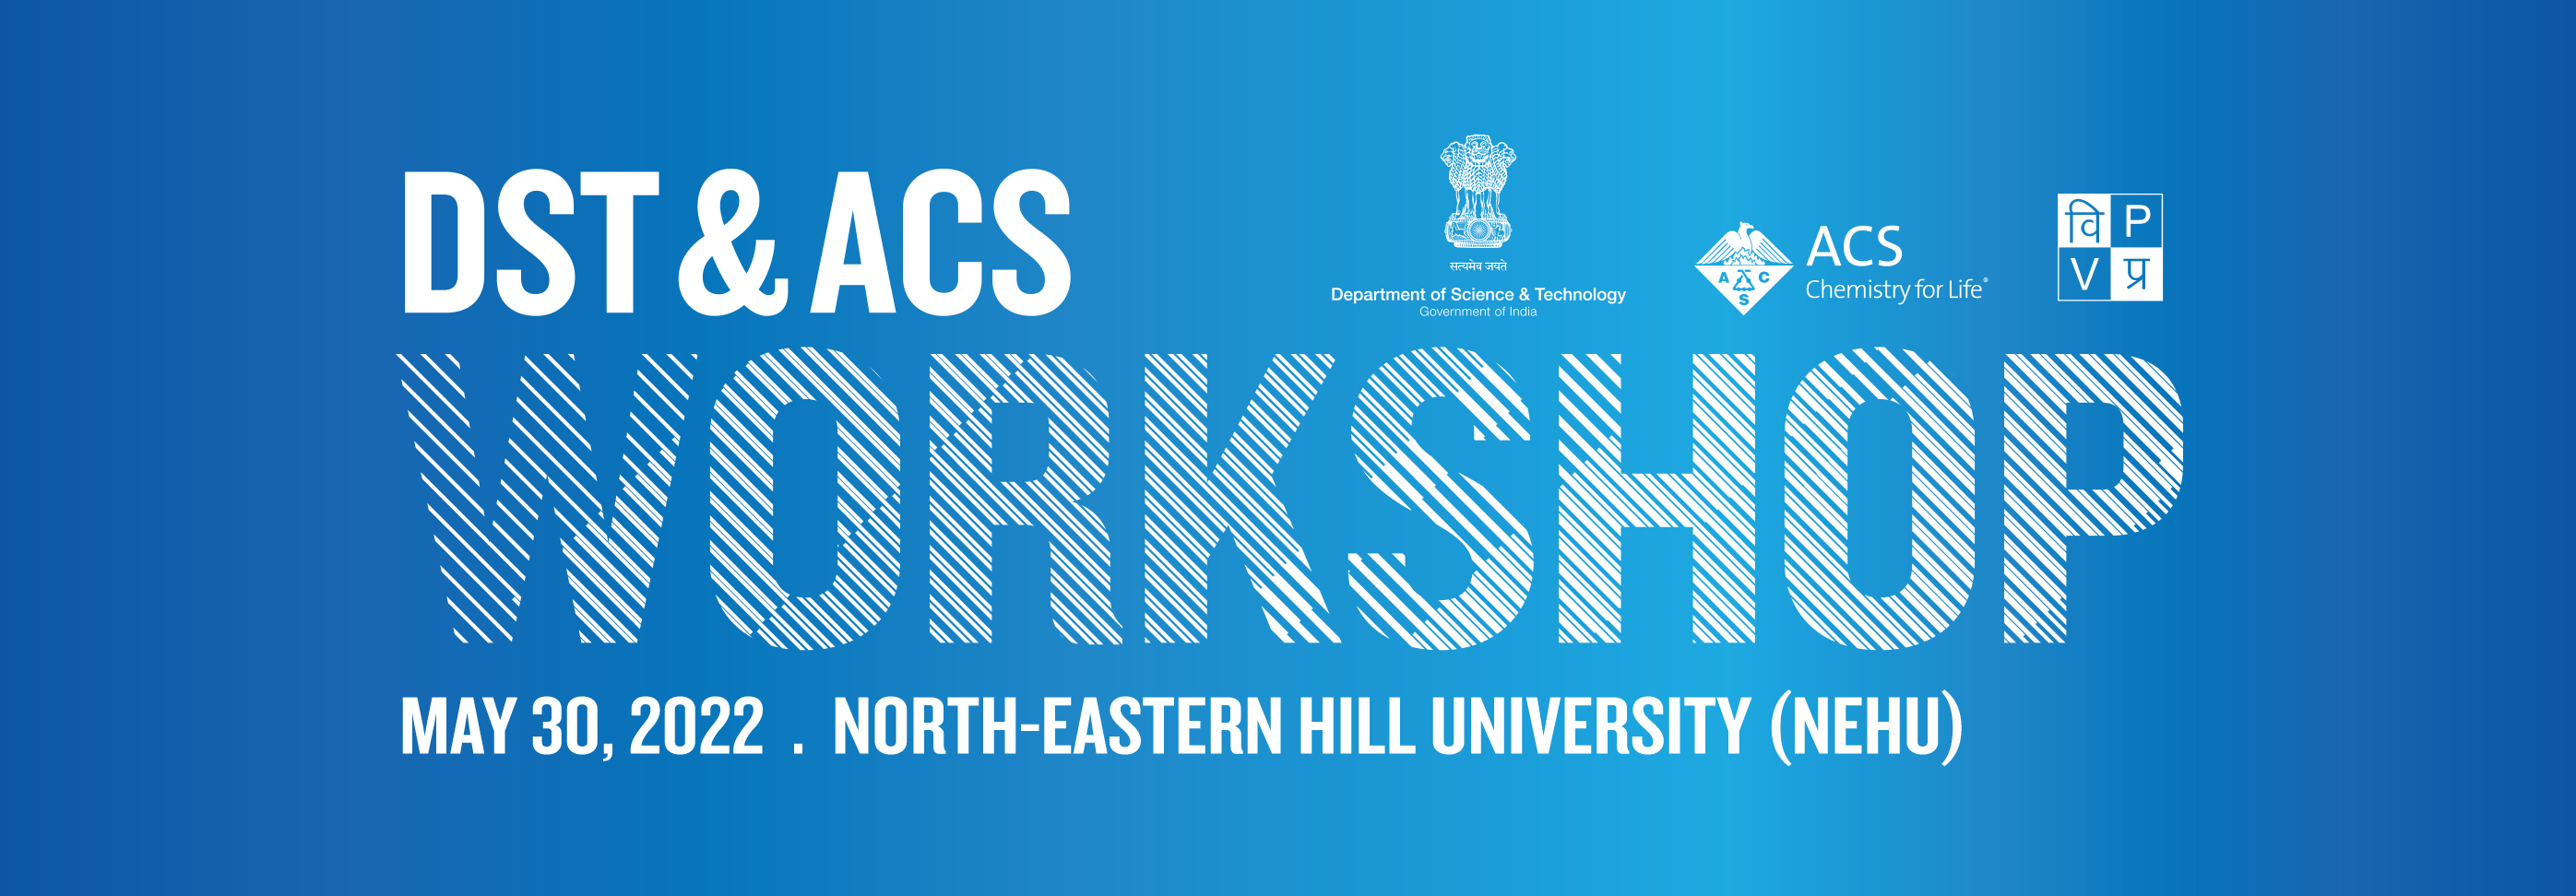 DST & ACS Workshop: North-Eastern Hill University (NEHU): May 30, 2022